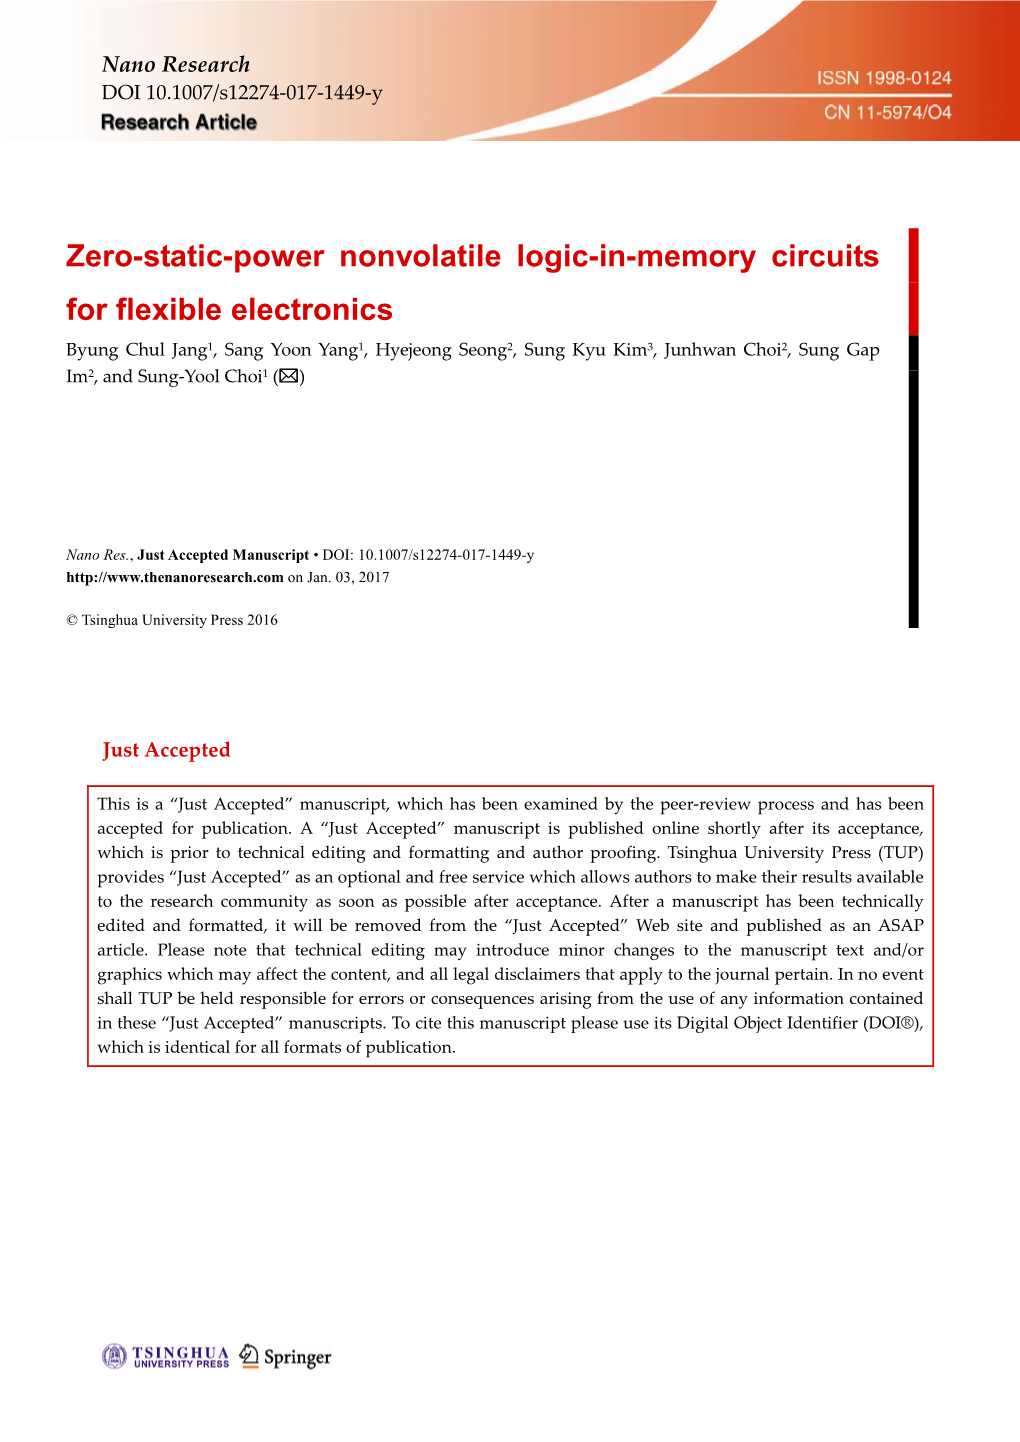 Zero-Static-Power Nonvolatile Logic-In-Memory Circuits for Flexible